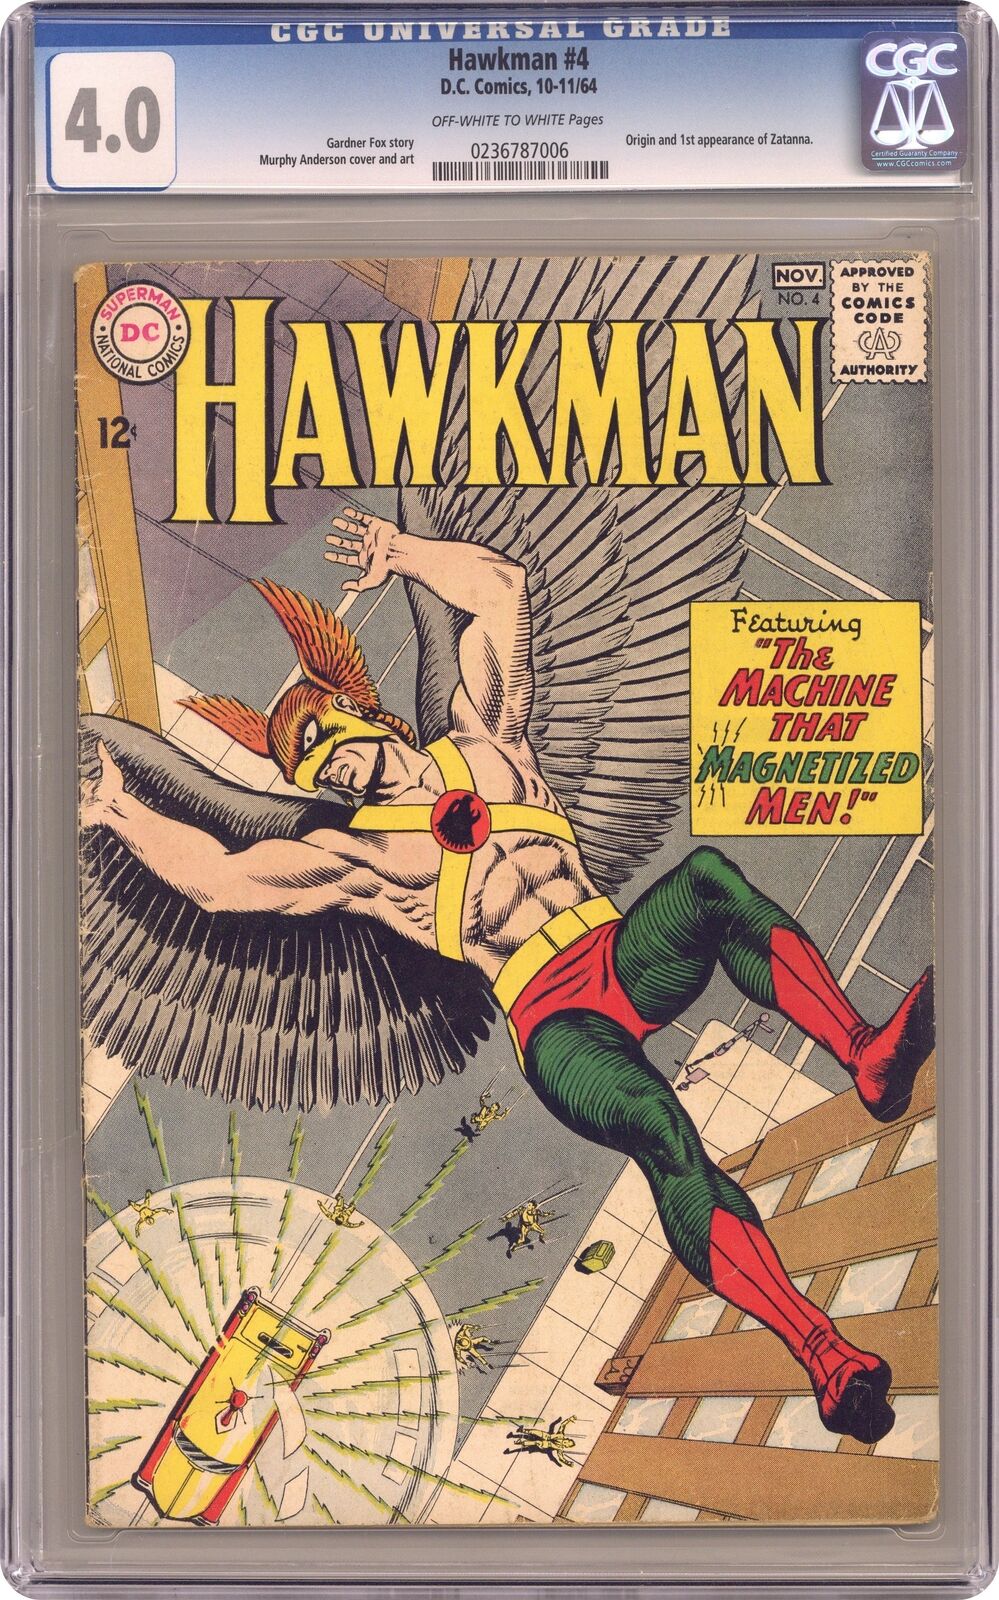 Hawkman #4 CGC 4.0 1964 0236787006 1st app. and origin Zatanna